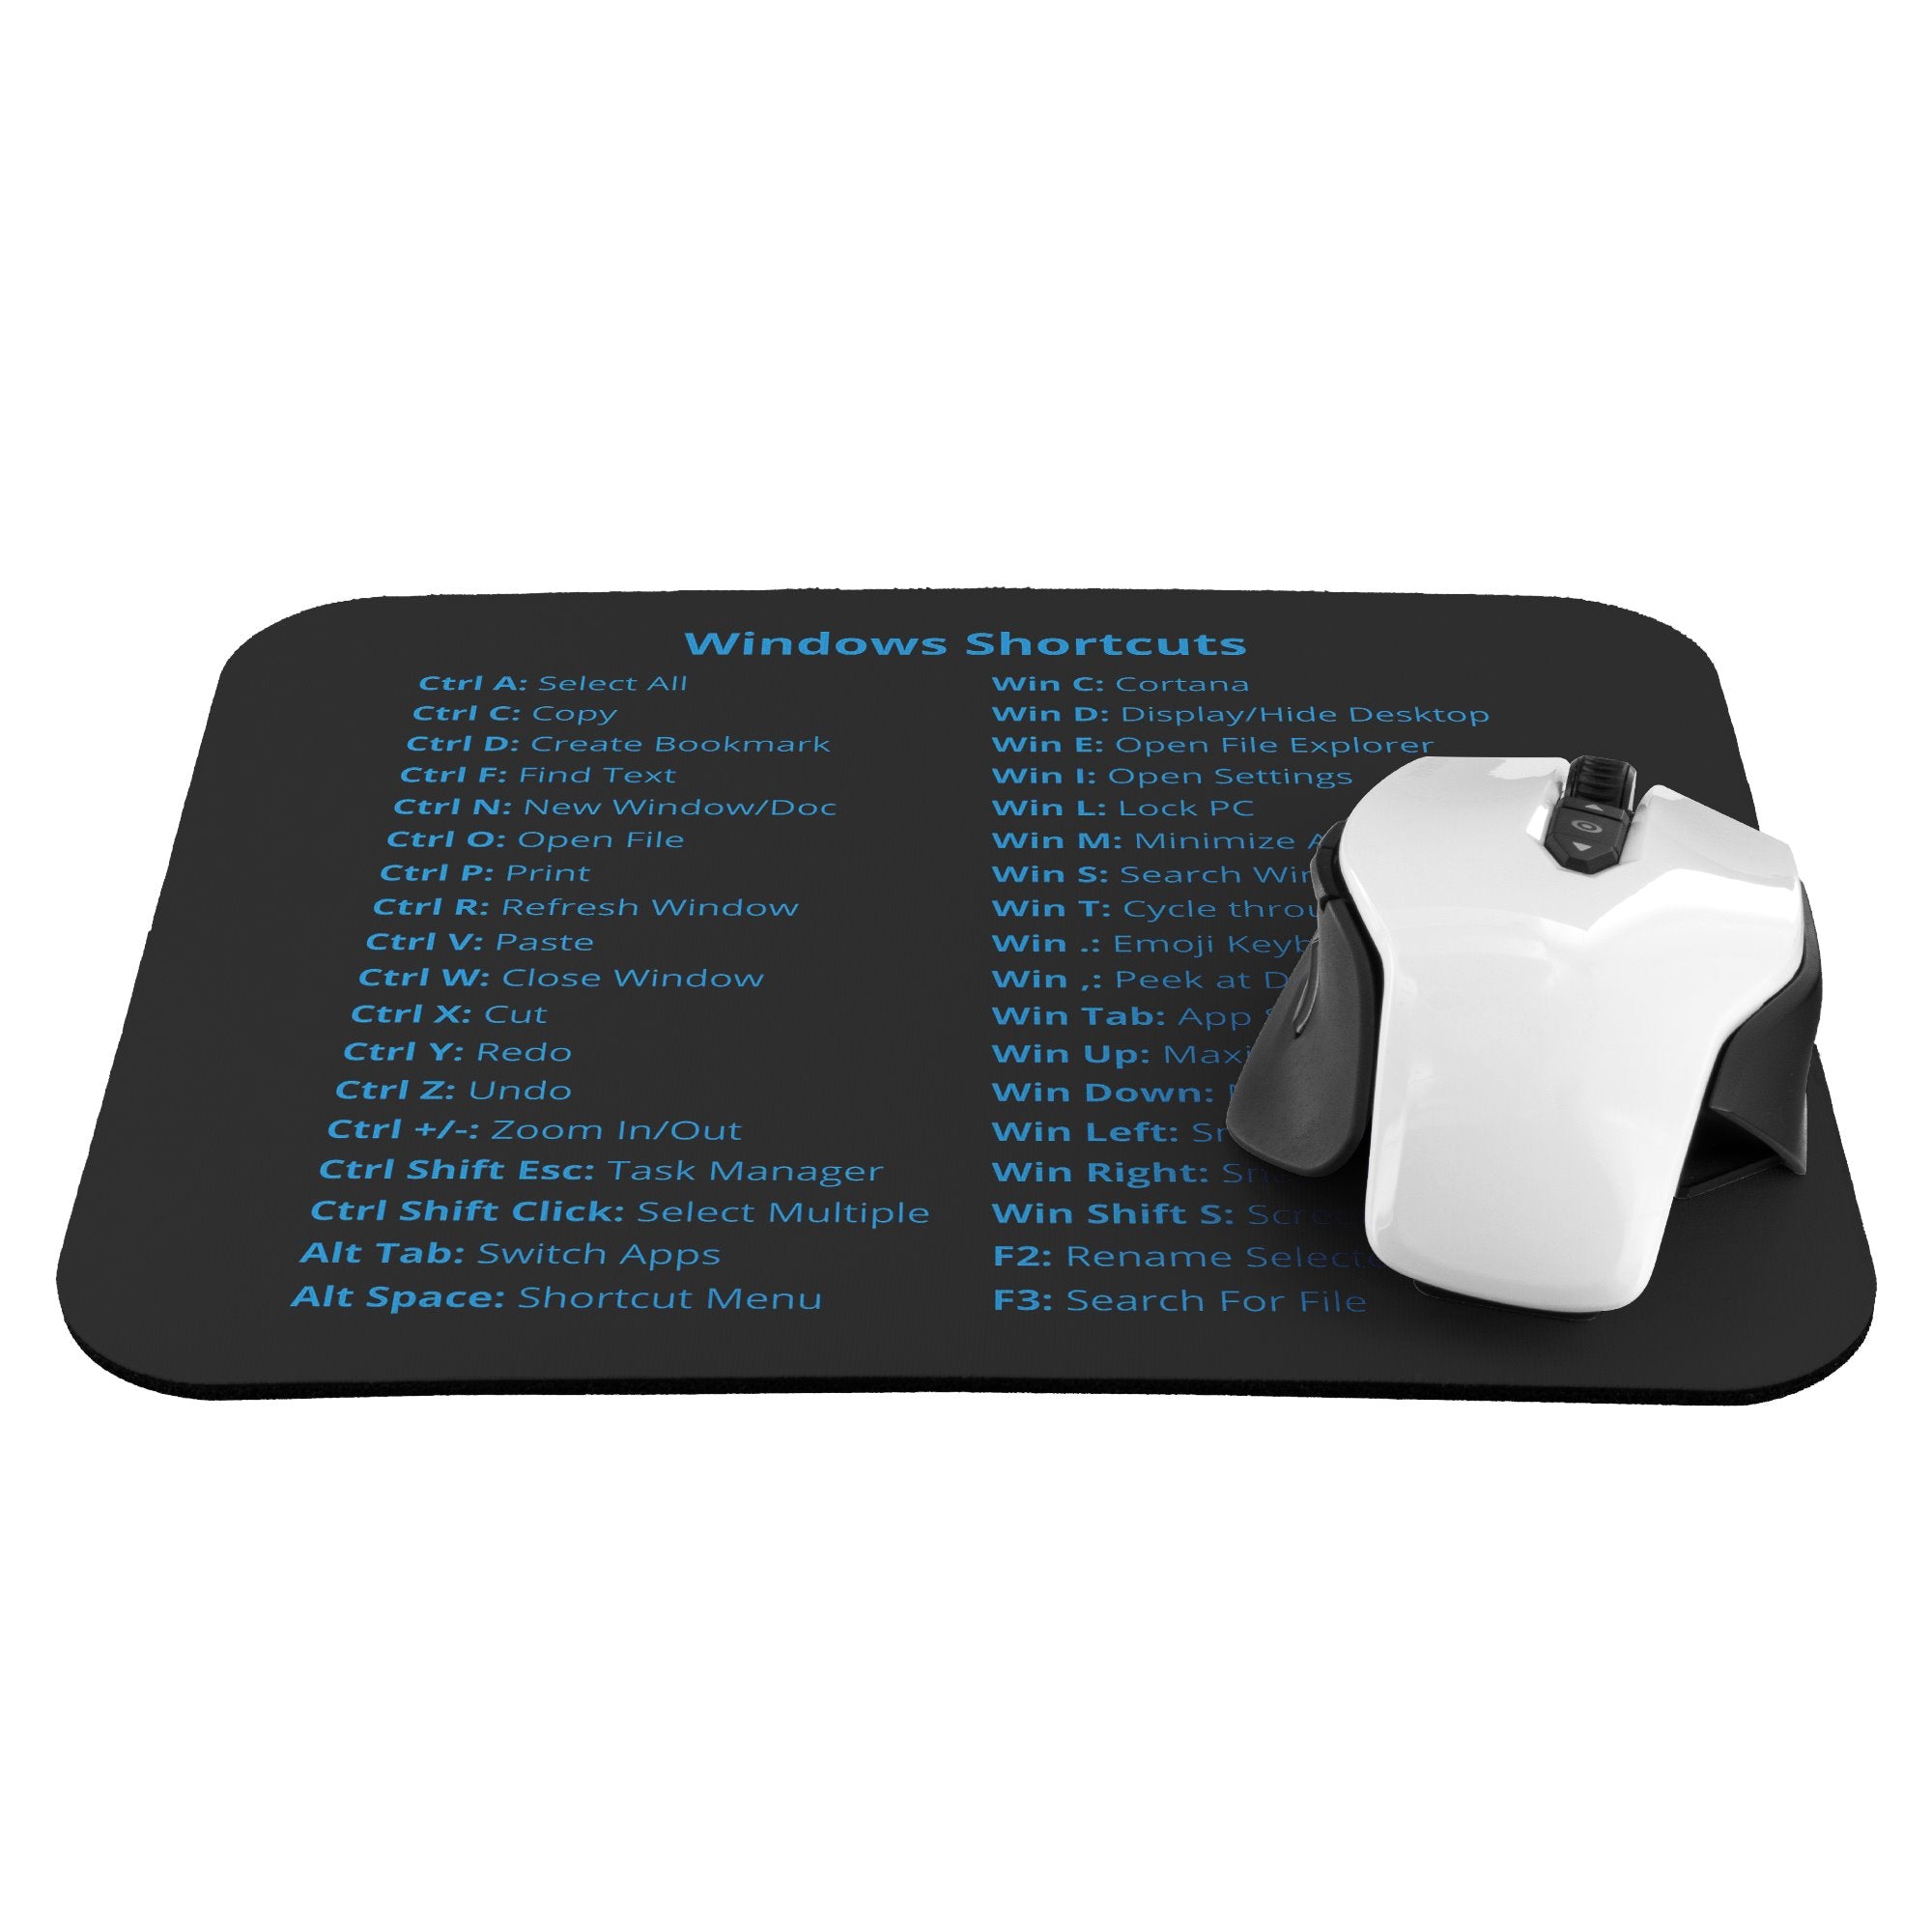 LIMITED: Windows Shortcuts Mousepad (Enterprise Edition) Mousepads teelaunch